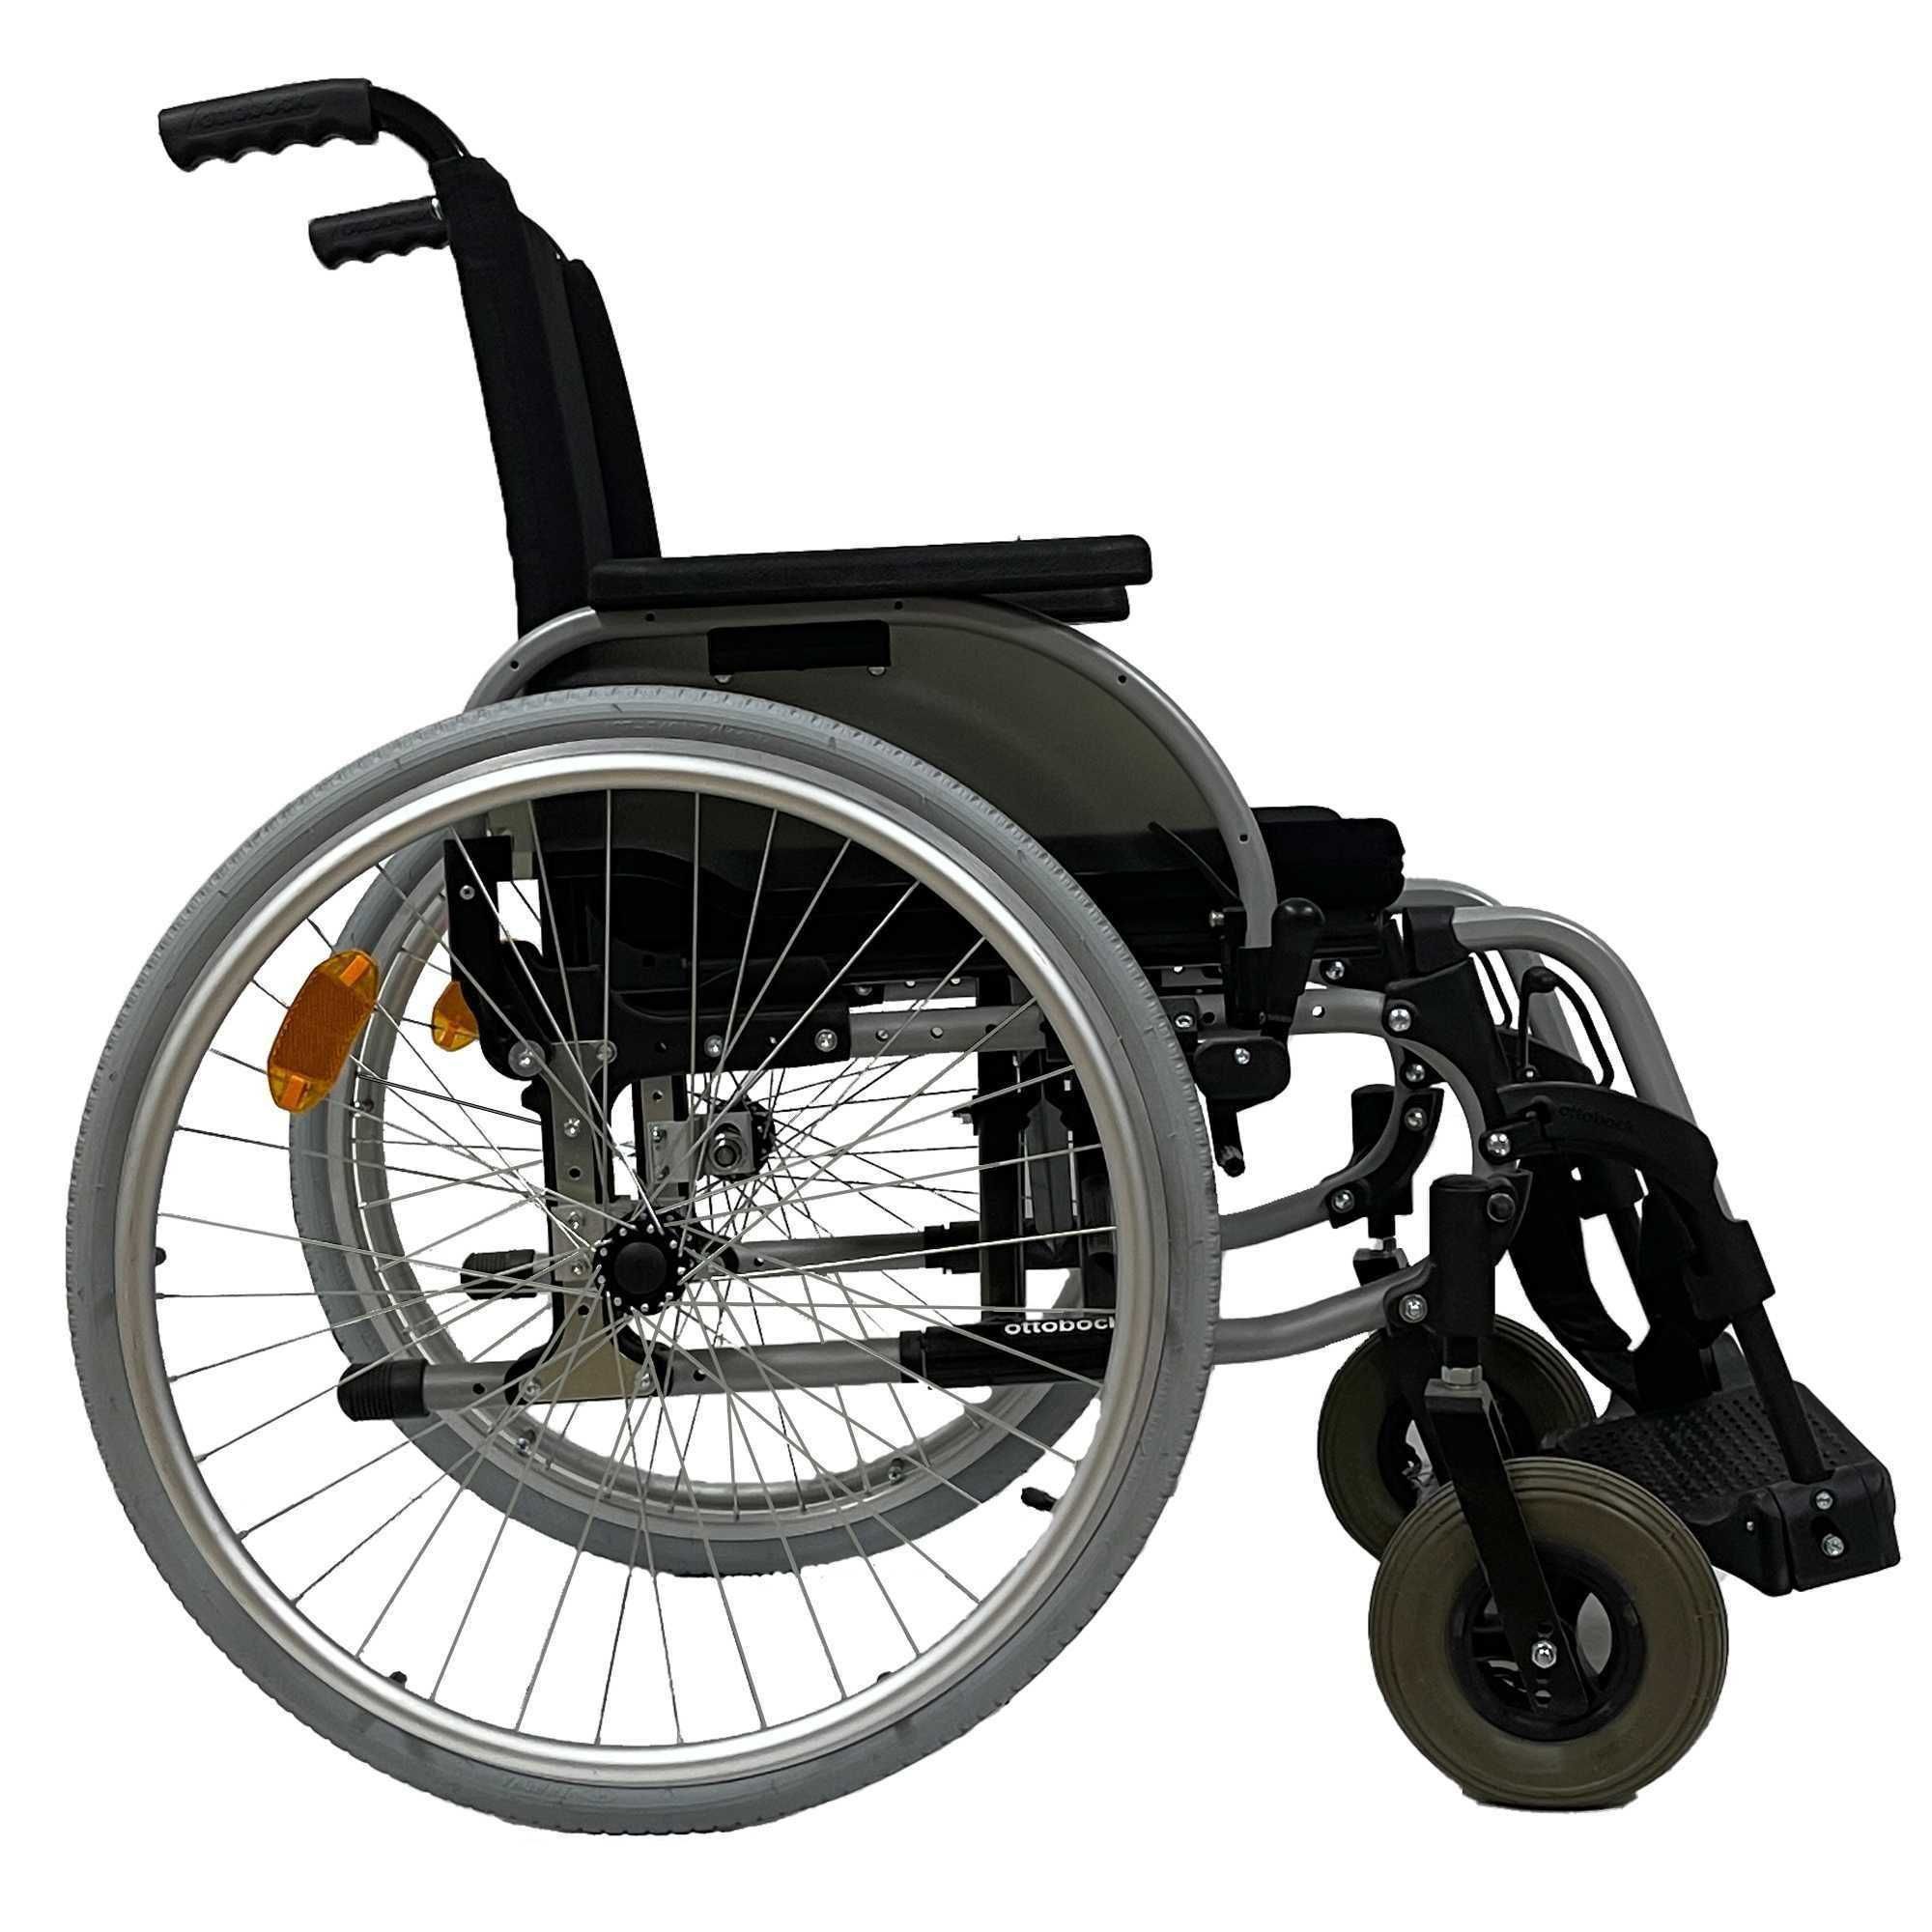 Инвалидная коляска Ногиронлар араваси аравачаси 11 ottobock